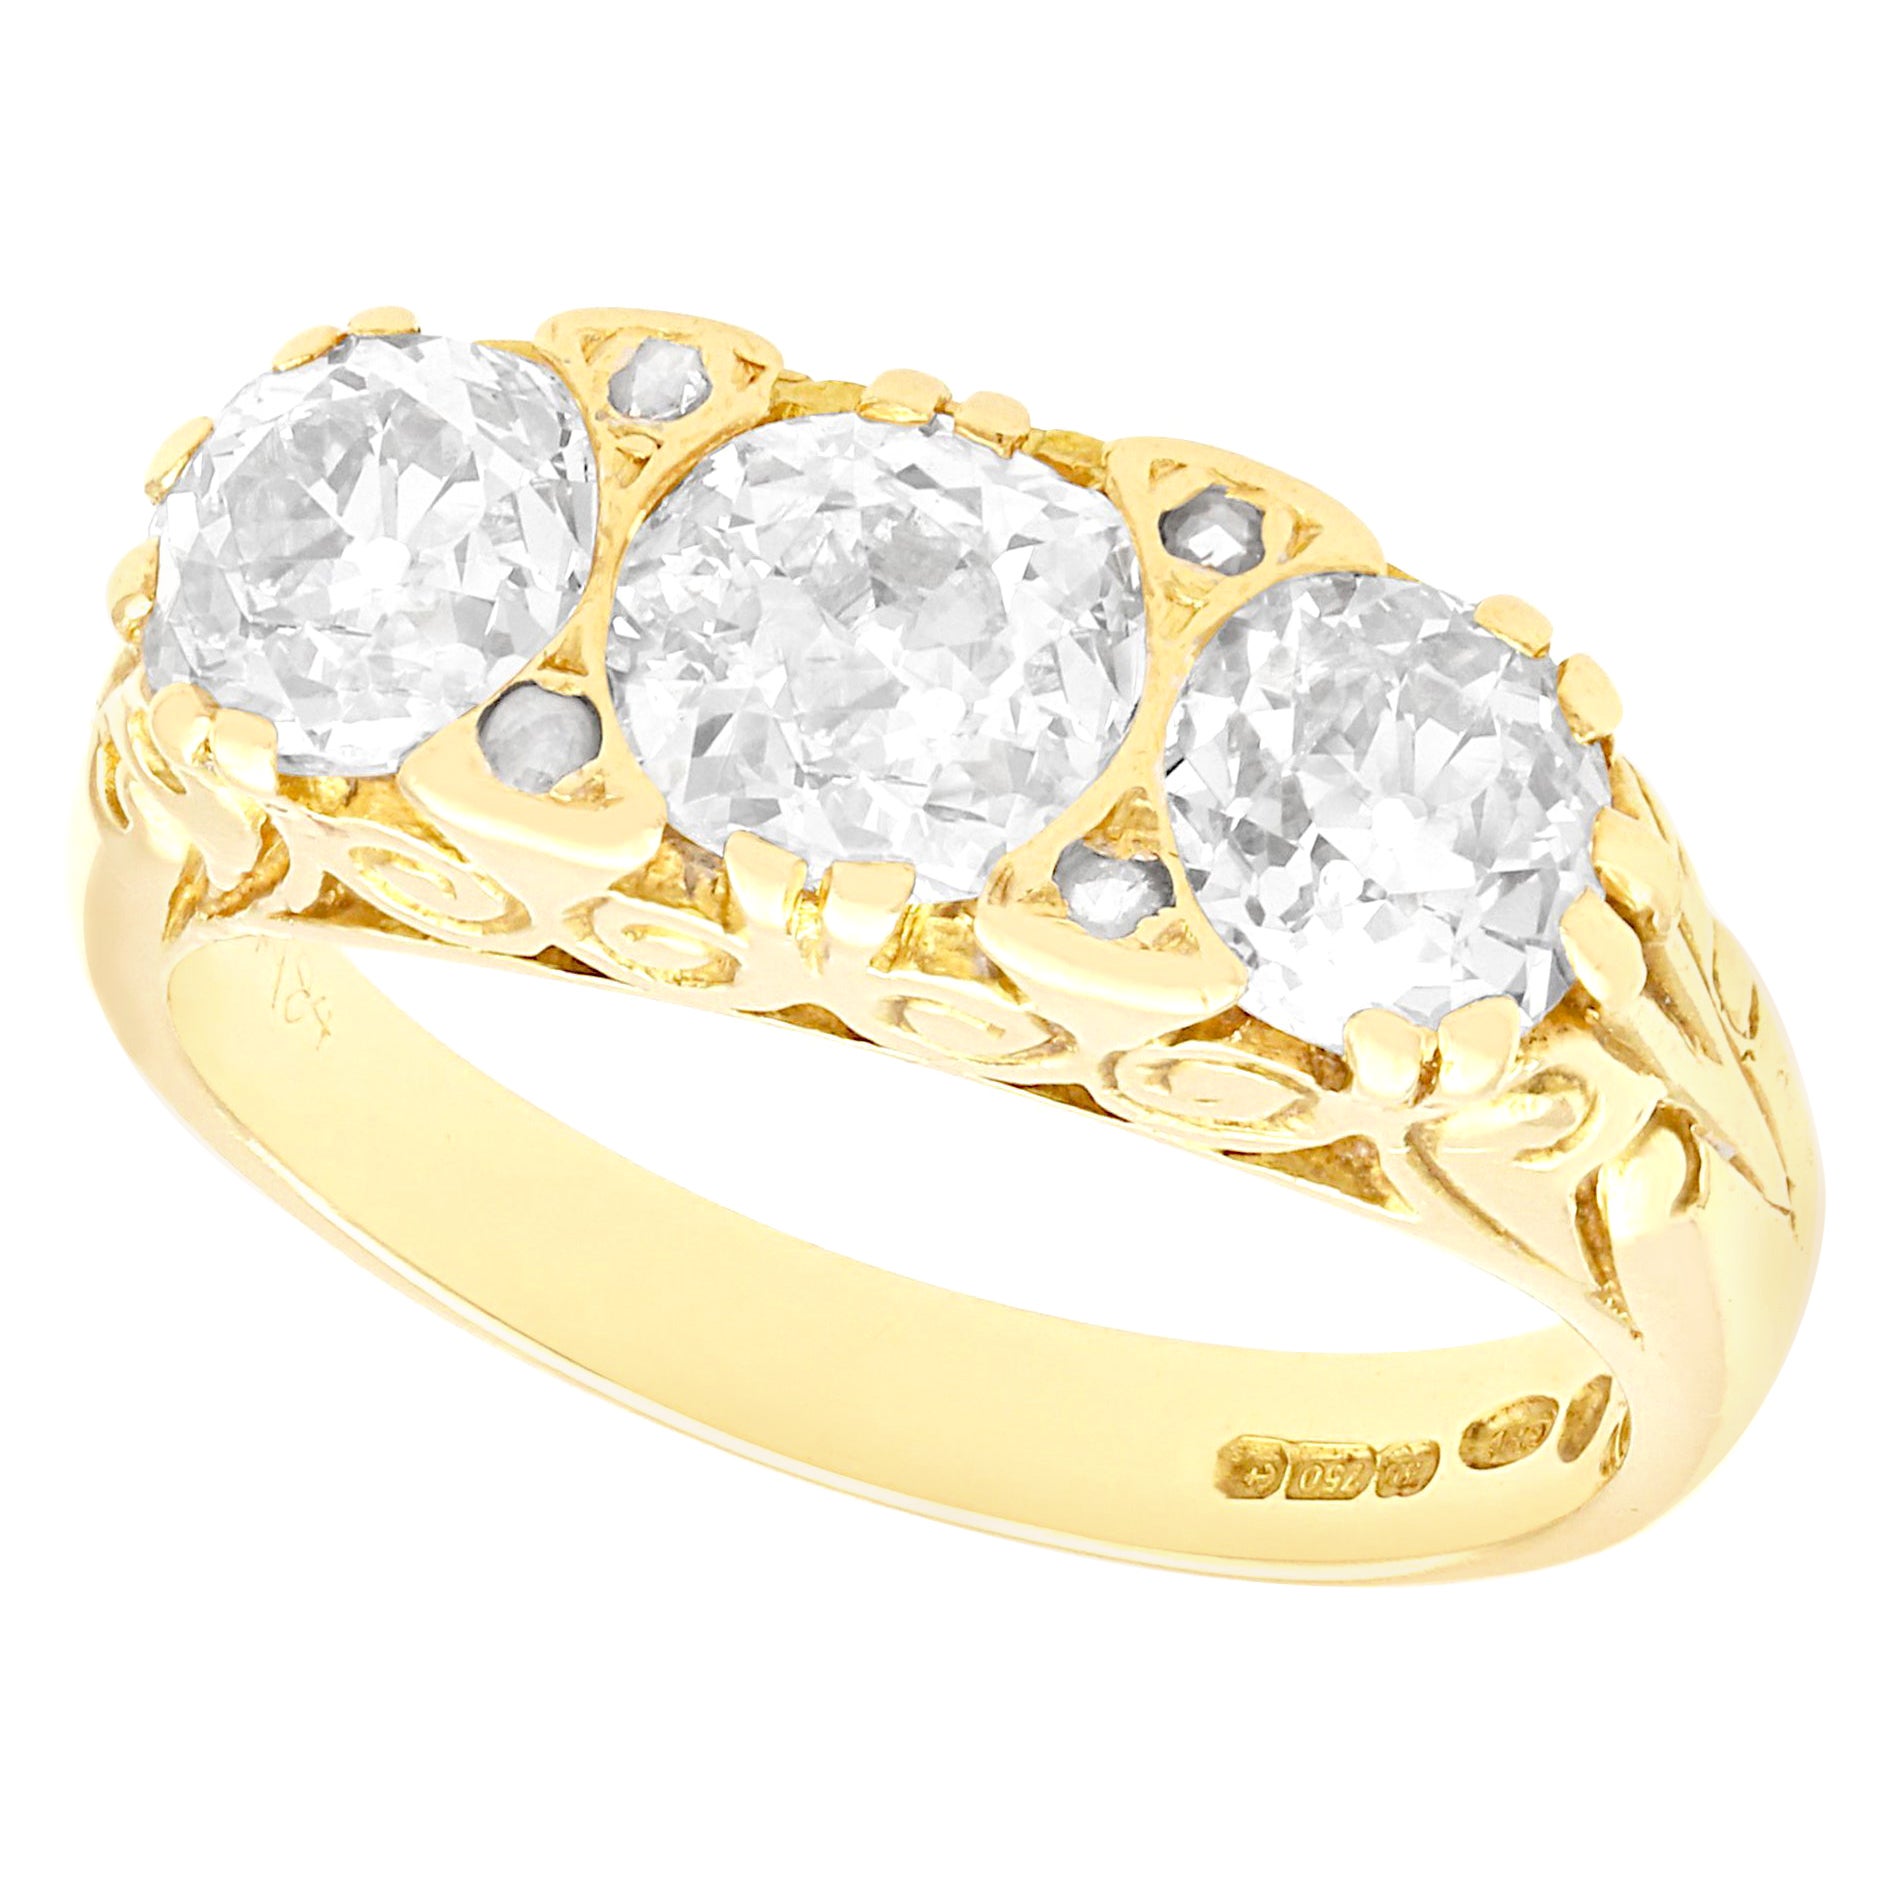 2.01 Carat Diamond and Yellow Gold Trilogy Ring